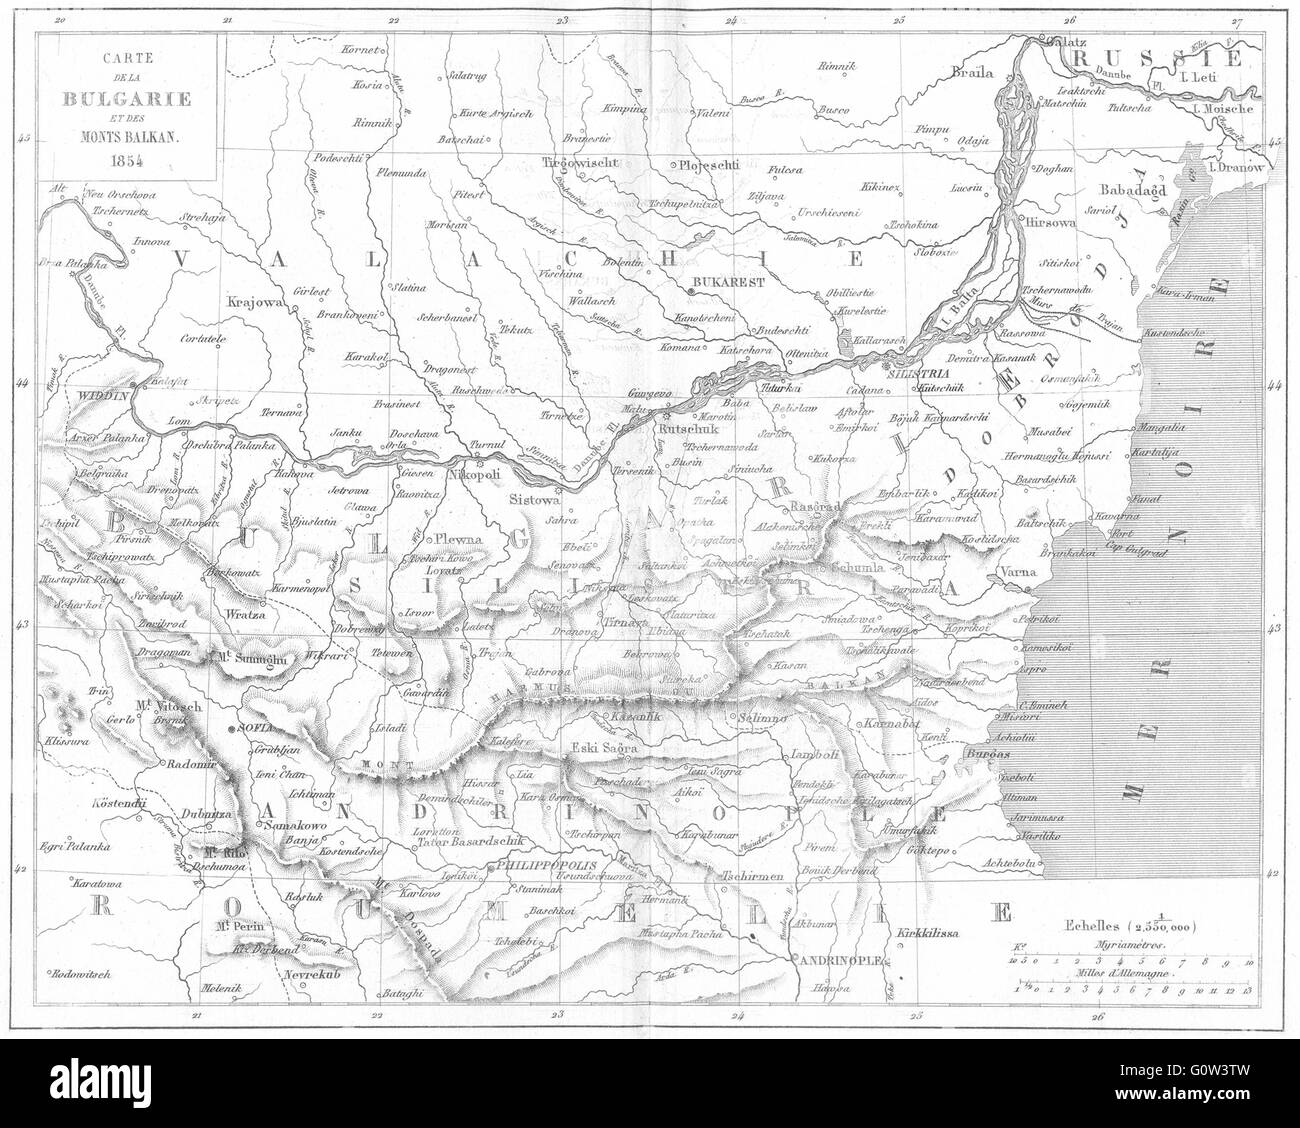 BALKANS: Carte de Bulgarie Monts Balkan 1854 Bulgaria, 1879 antique map  Stock Photo - Alamy